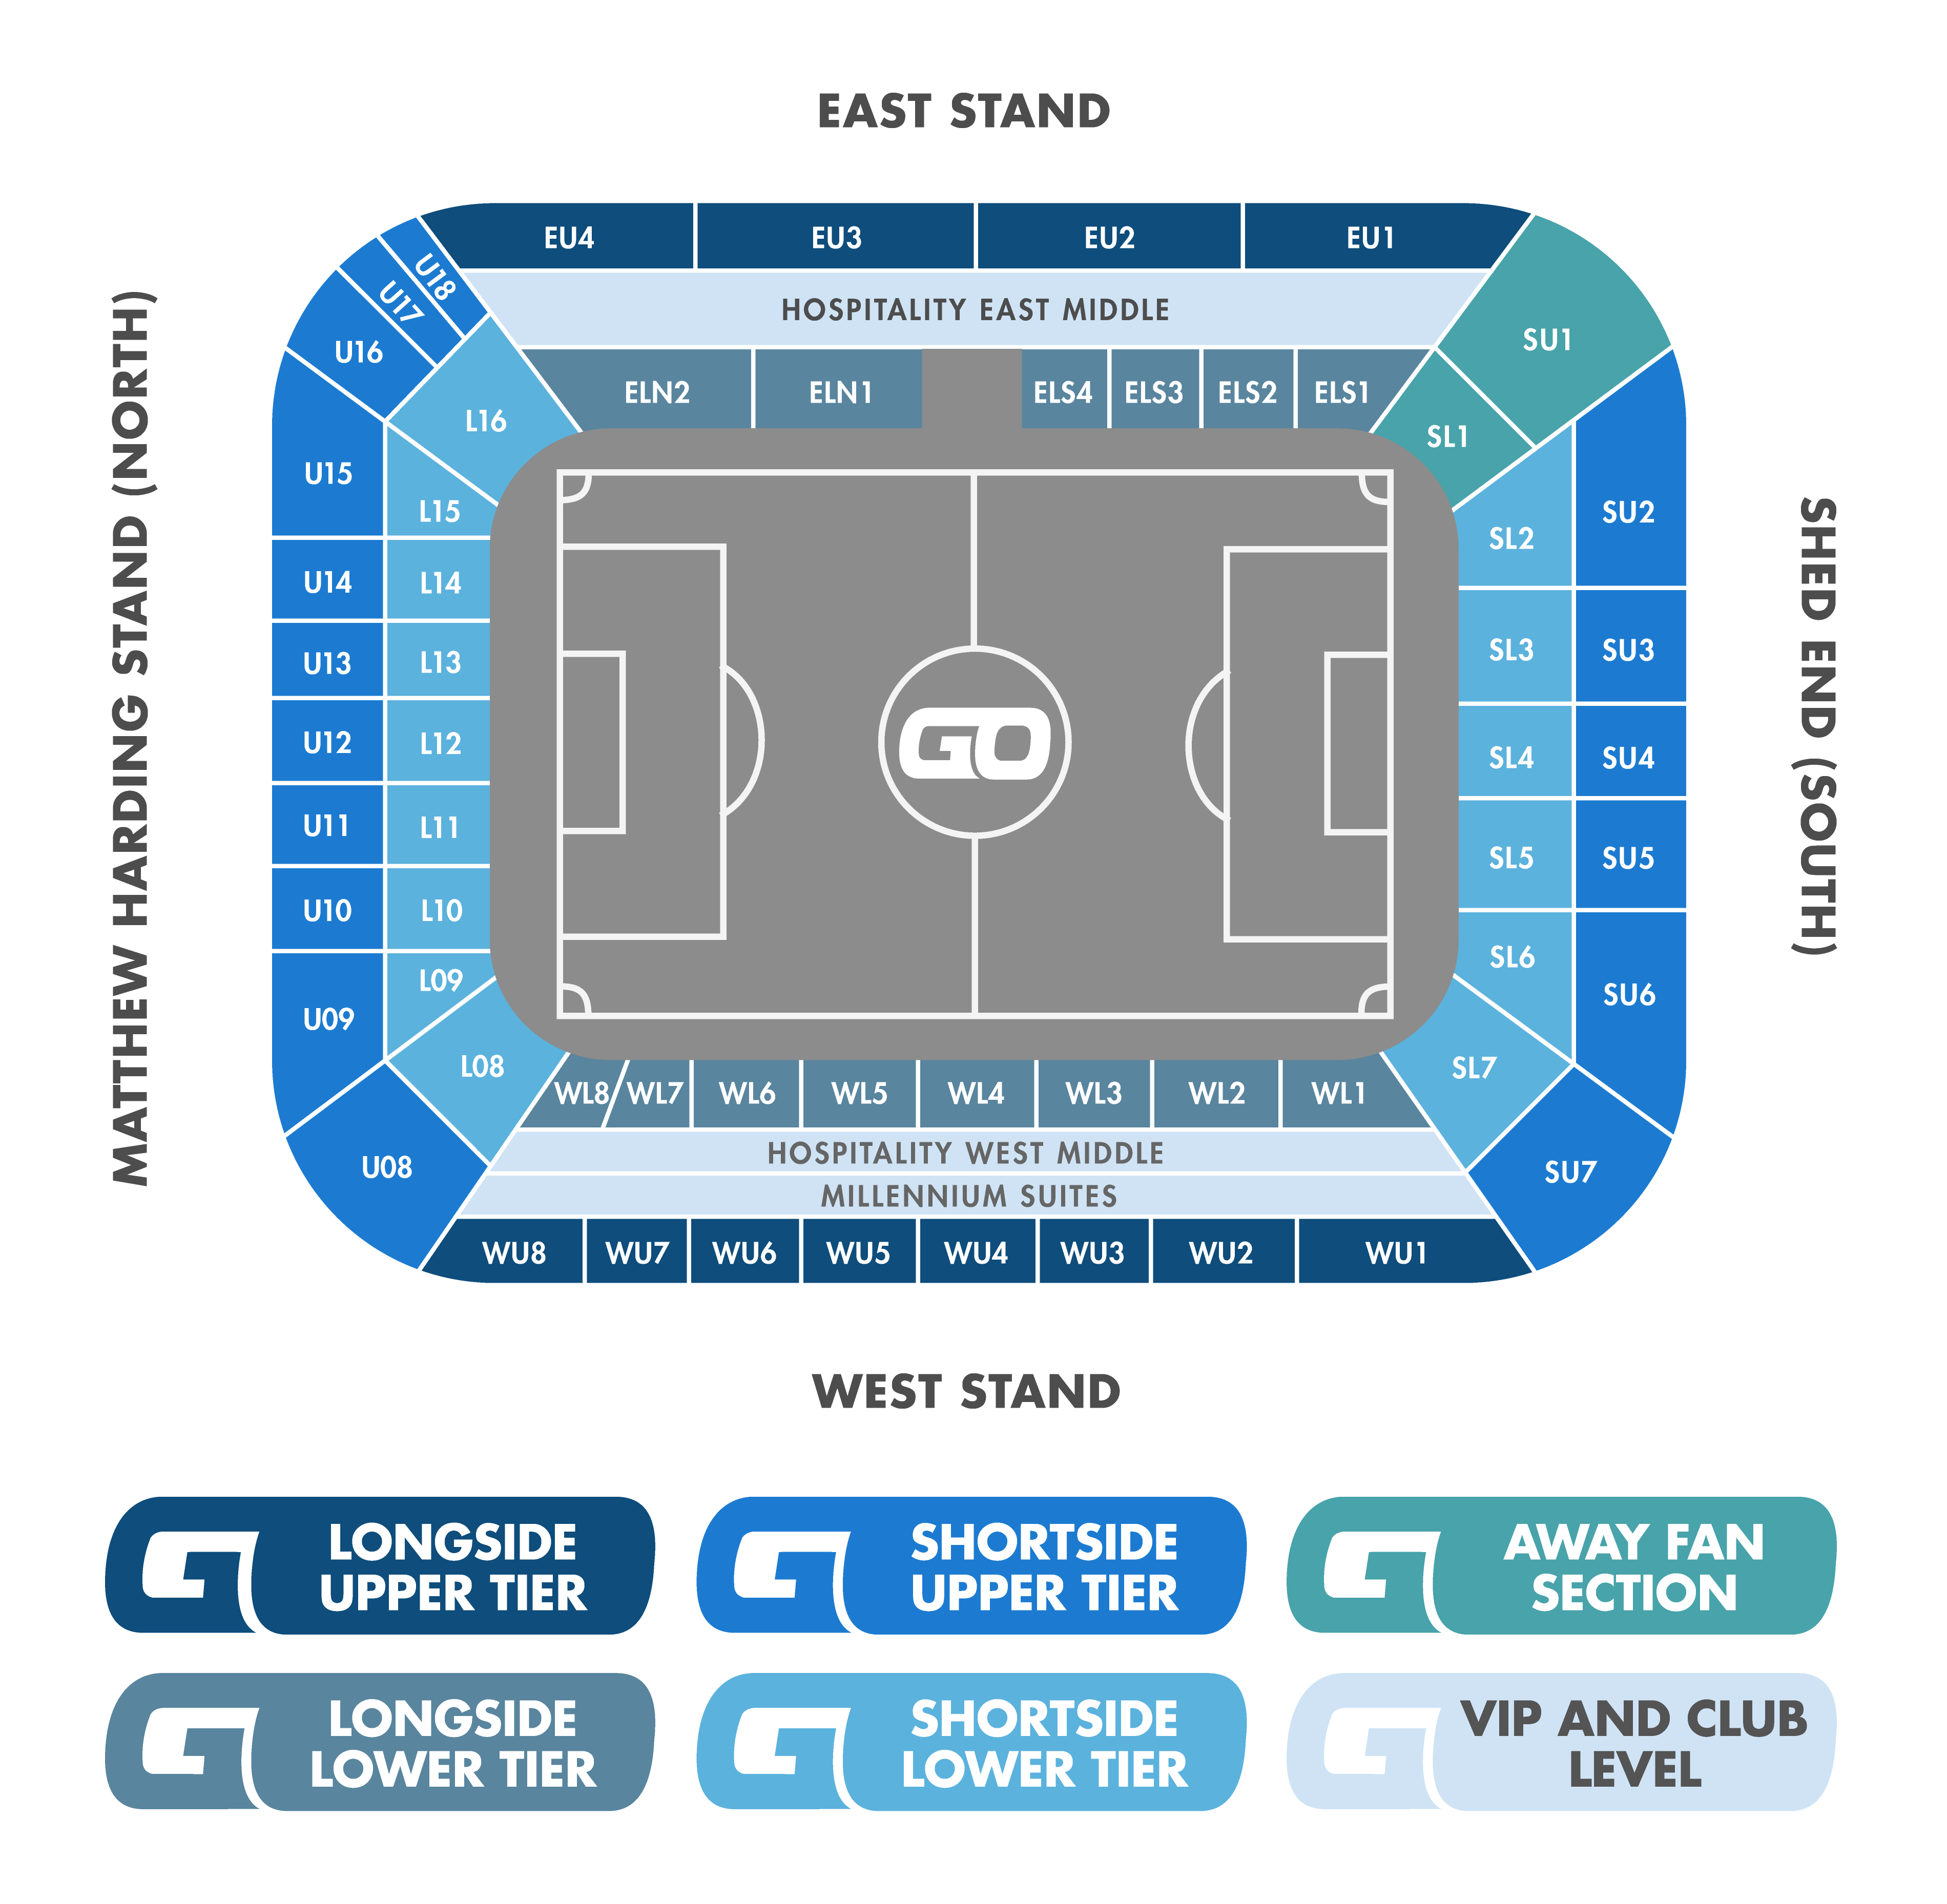 Stamford Bridge Seating Chart